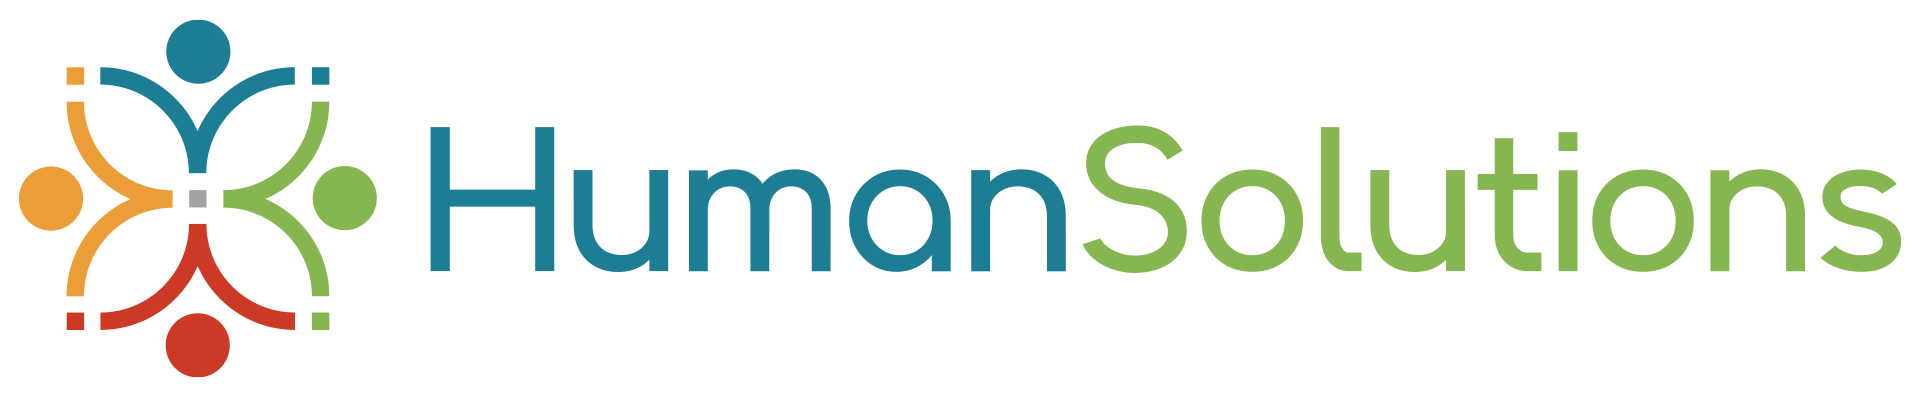 Human Solutions Logo